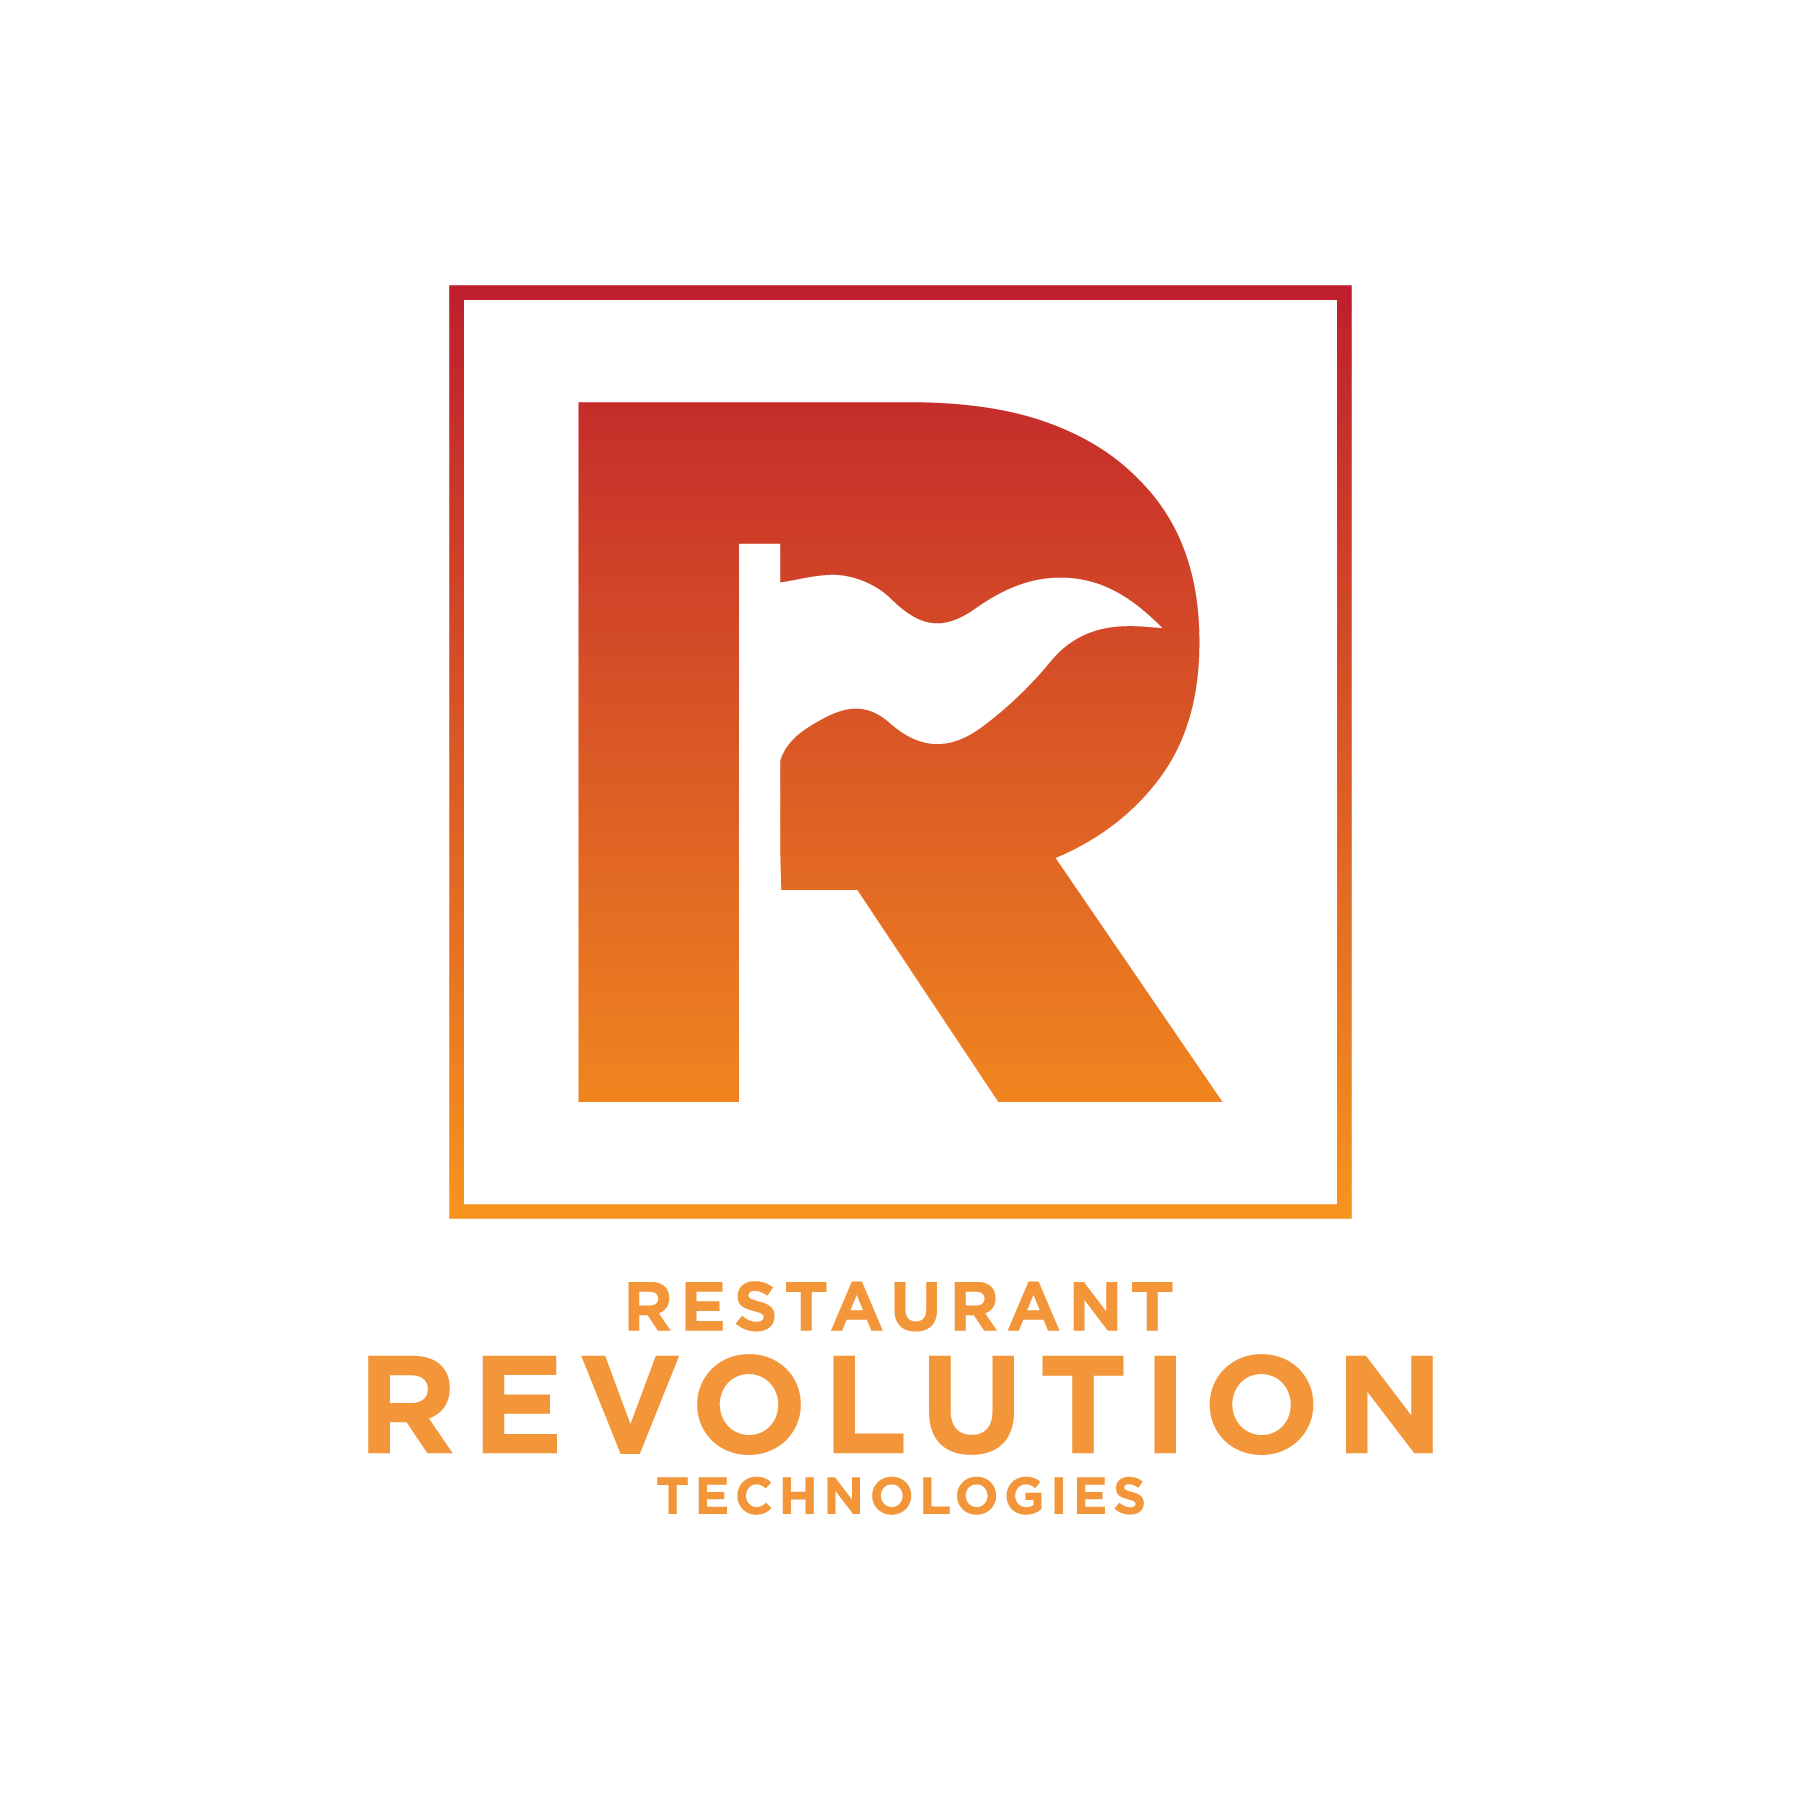 Image of Restaurant revolution logo